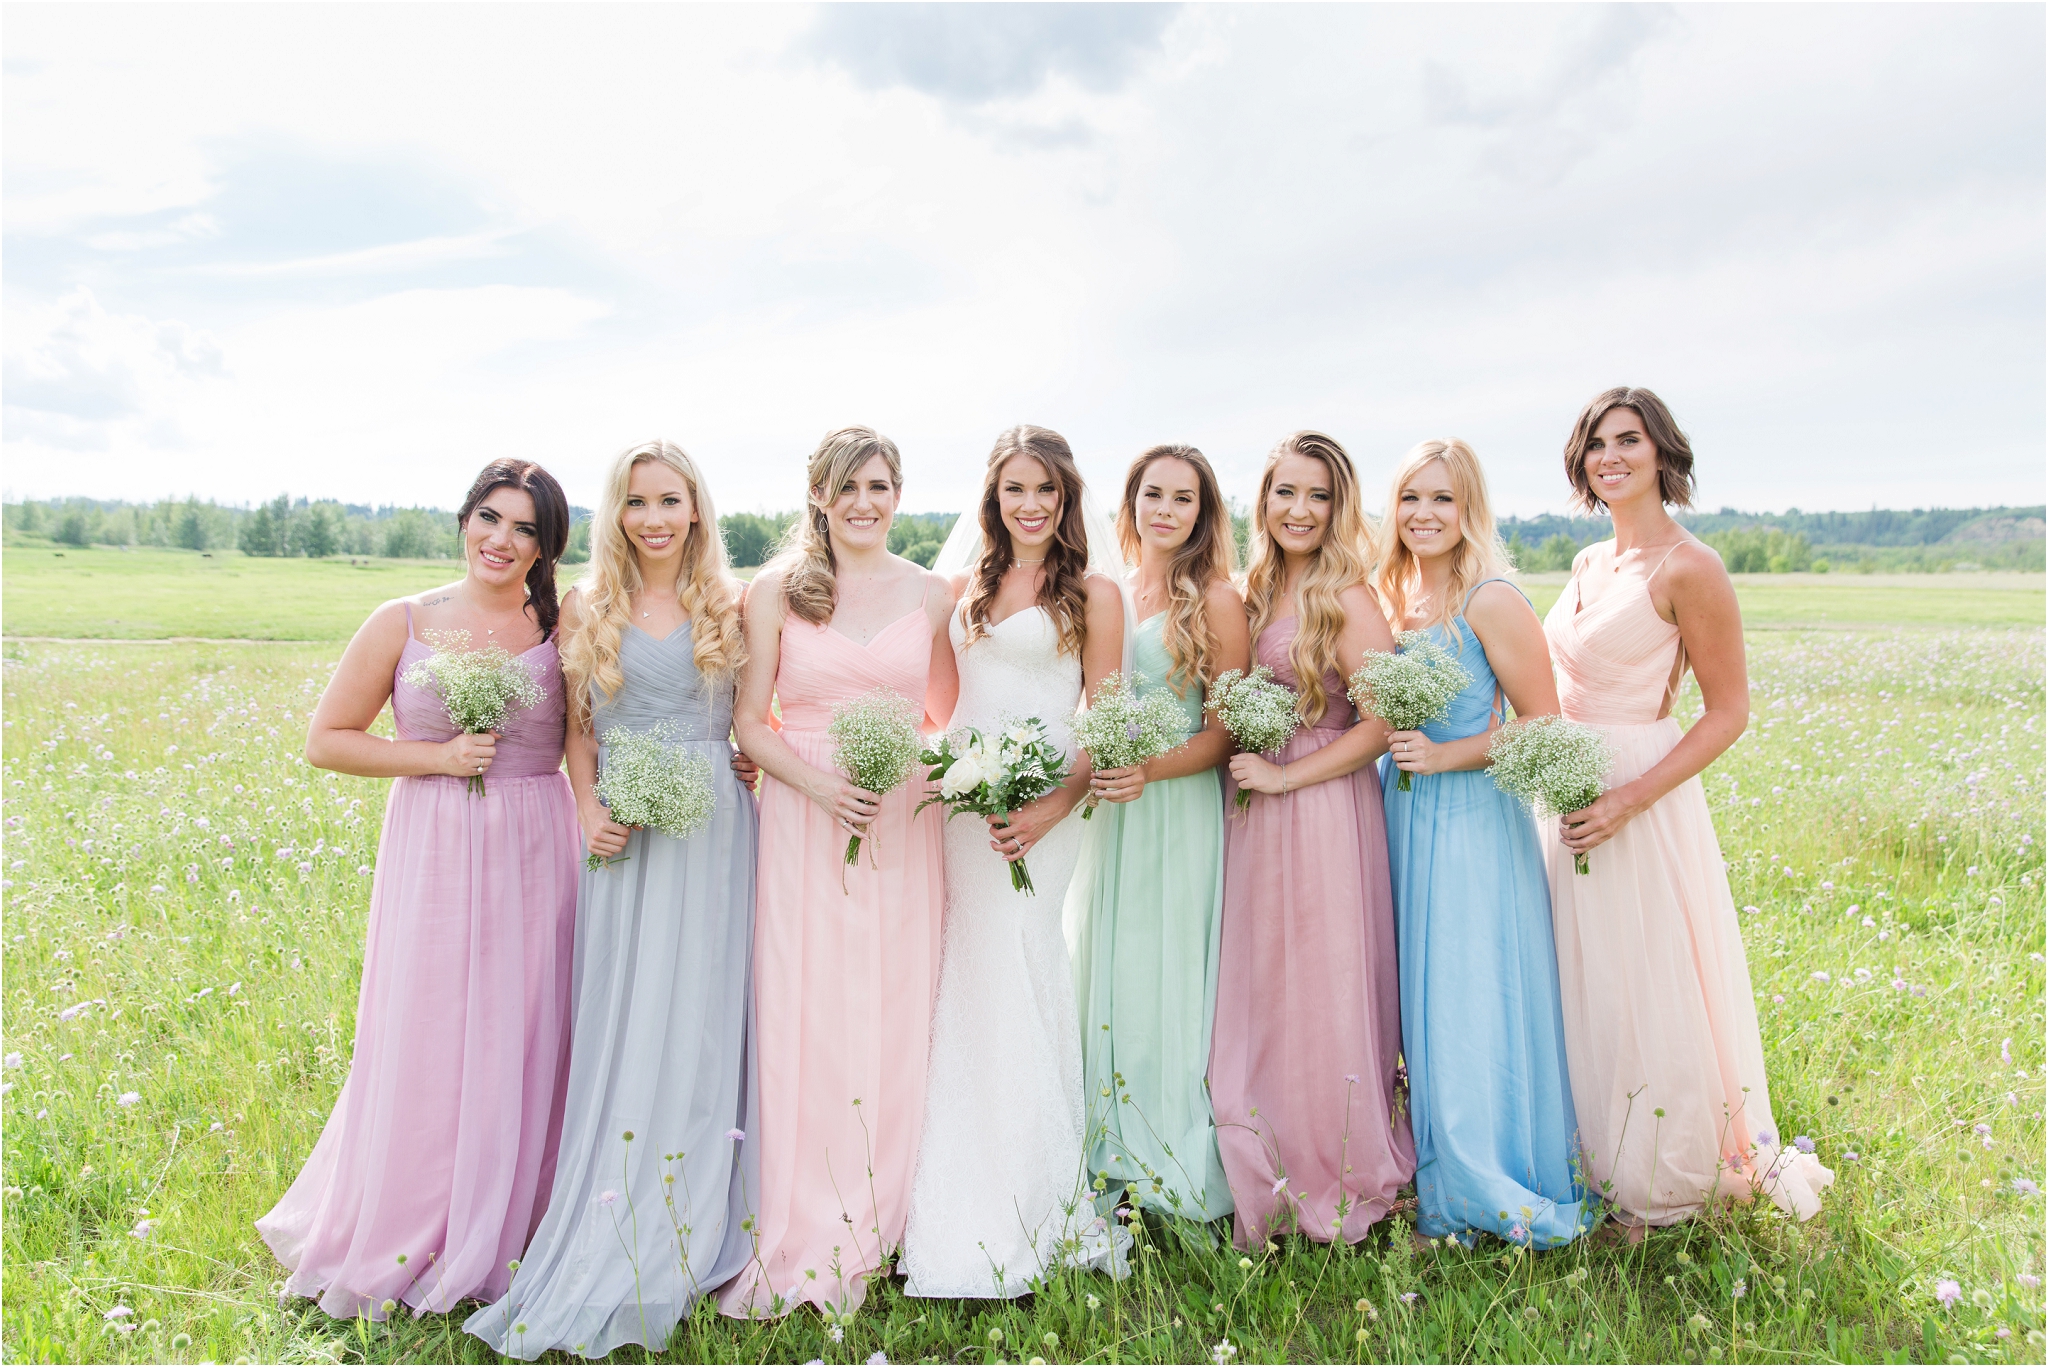 field wedding photos edmonton nc photography pastel bridesmaid dresses